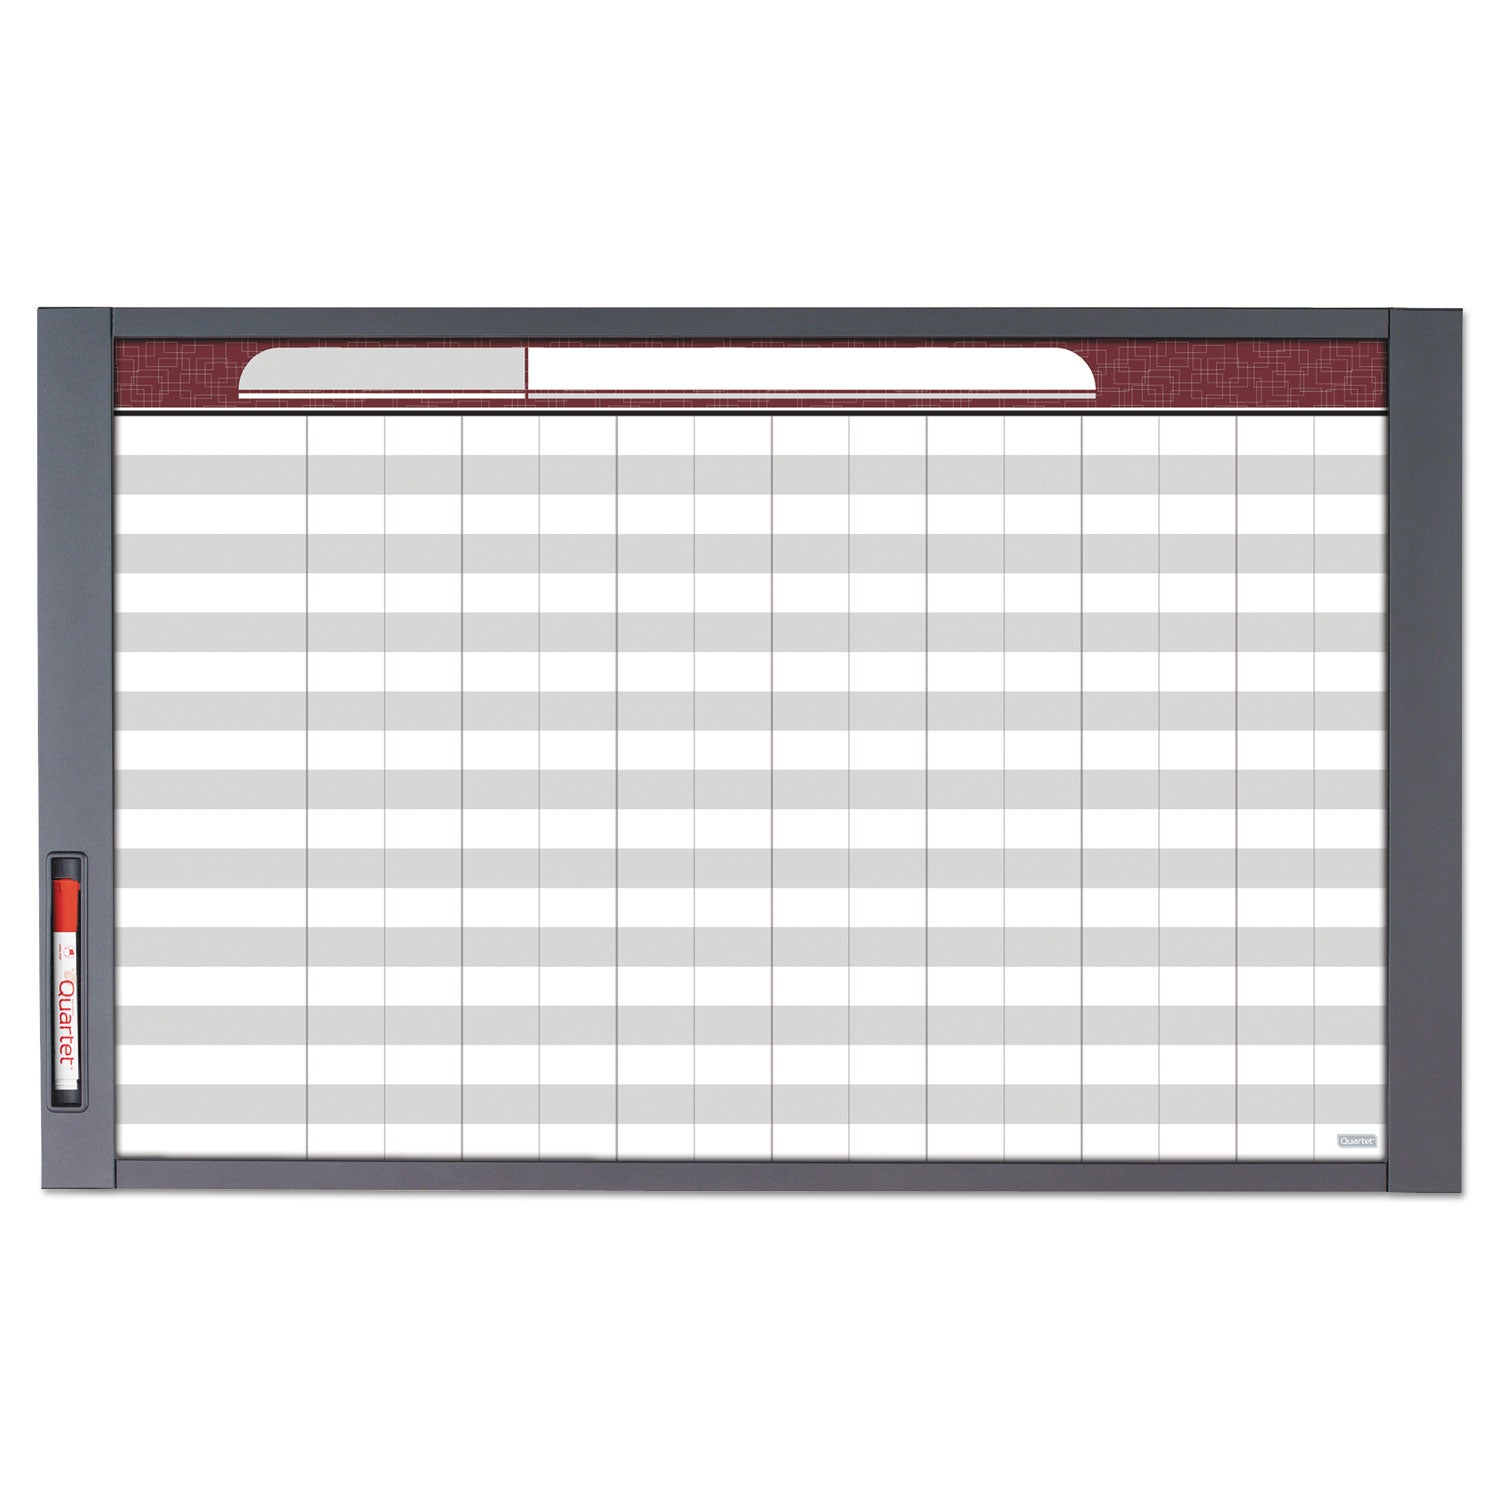 InView Custom Whiteboard, 36 x 24, White/Clear Surface, Graphite Fiberboard Frame - 